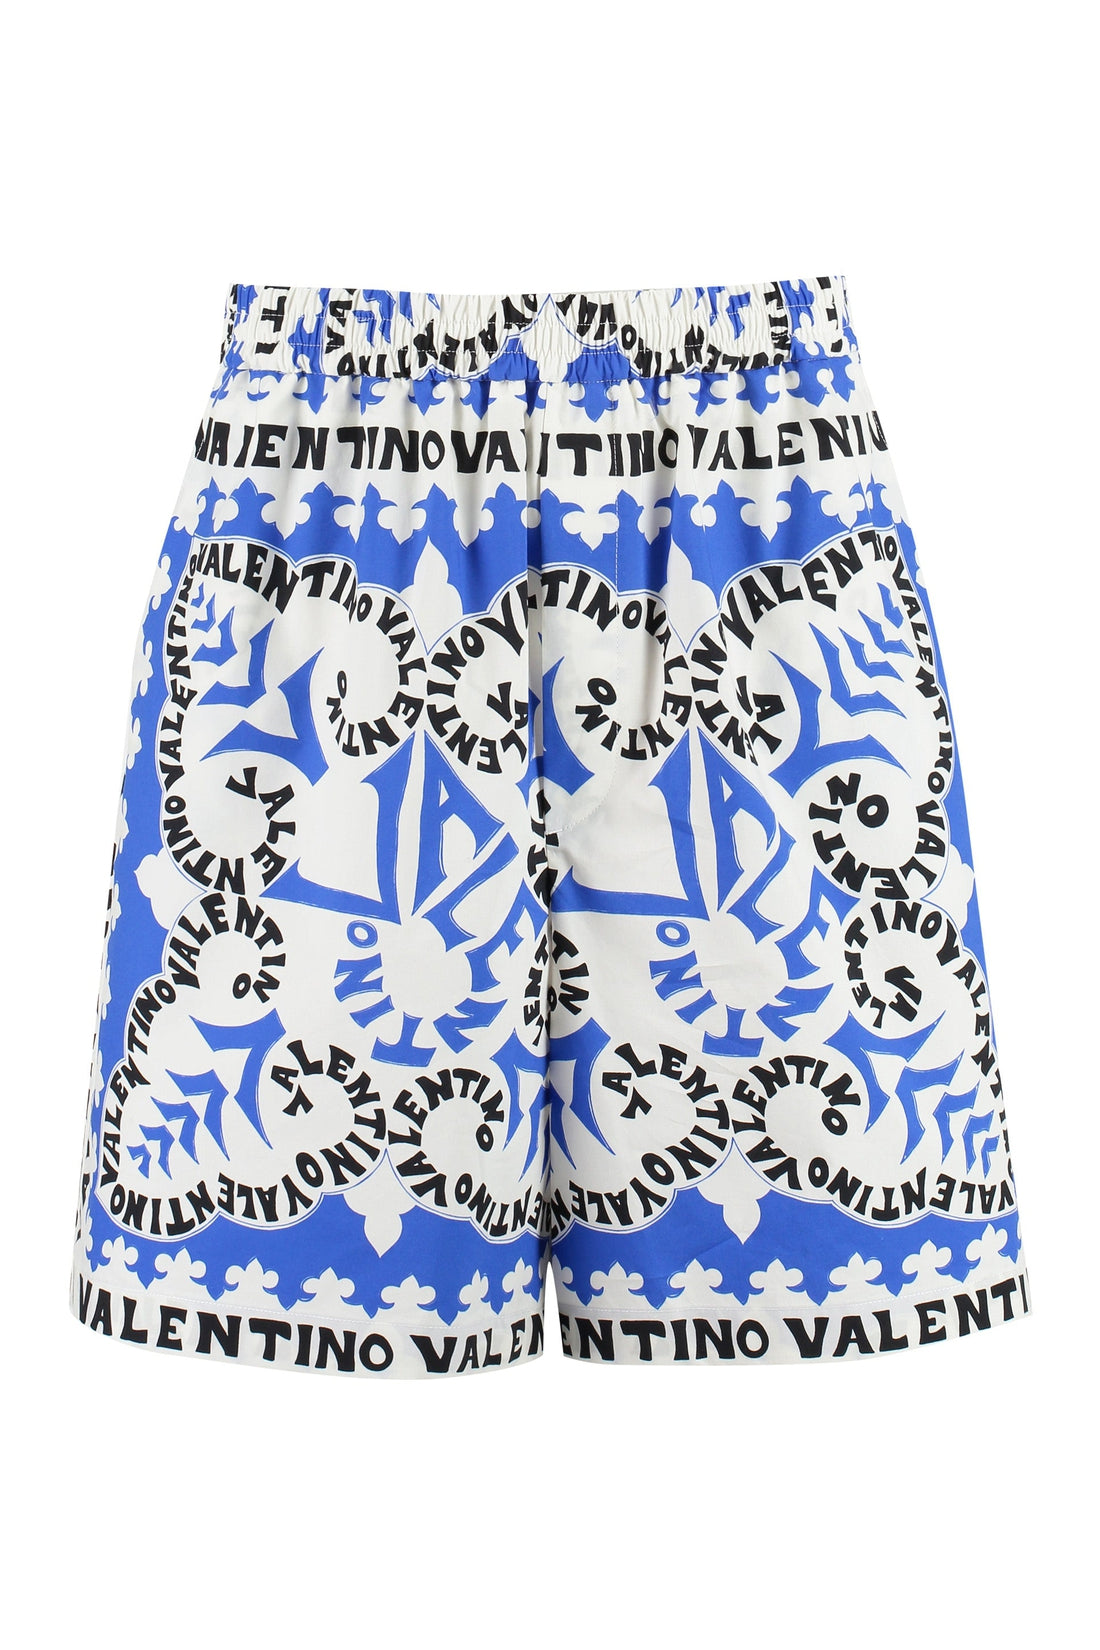 Valentino-OUTLET-SALE-Printed cotton bermuda shorts-ARCHIVIST